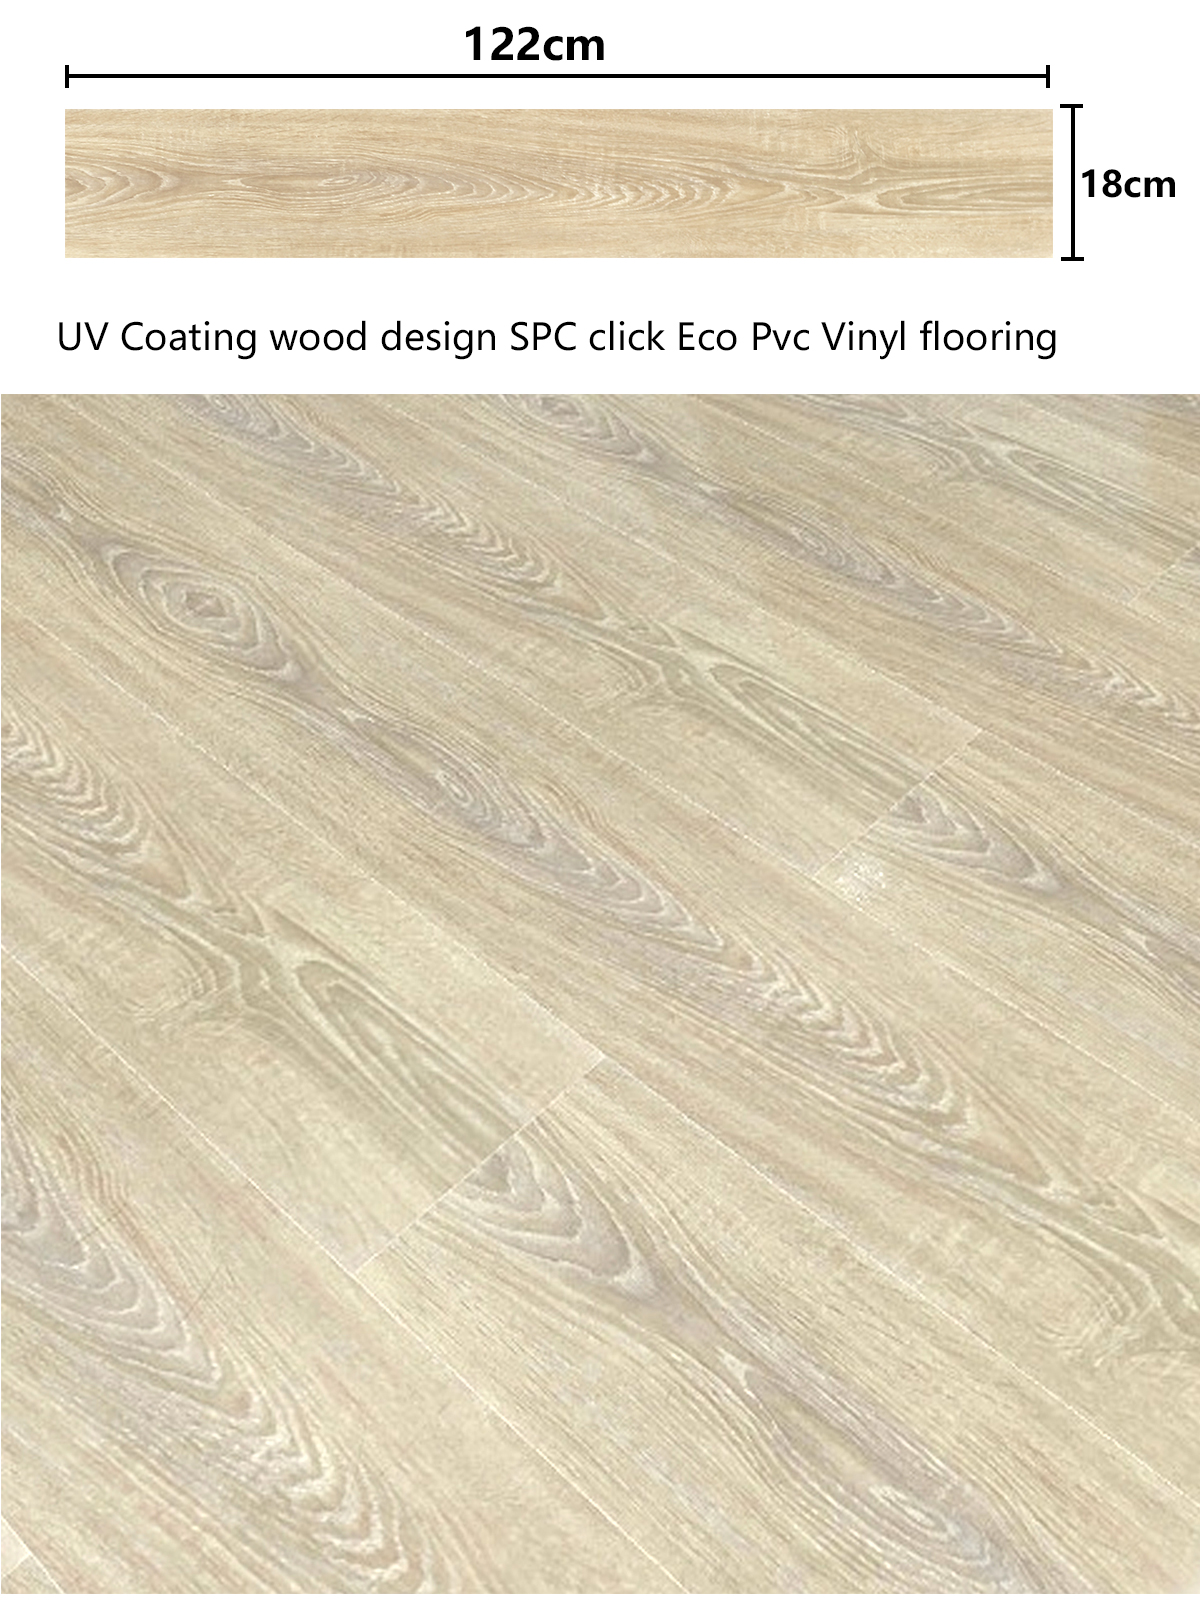 SPC vinyl flooring